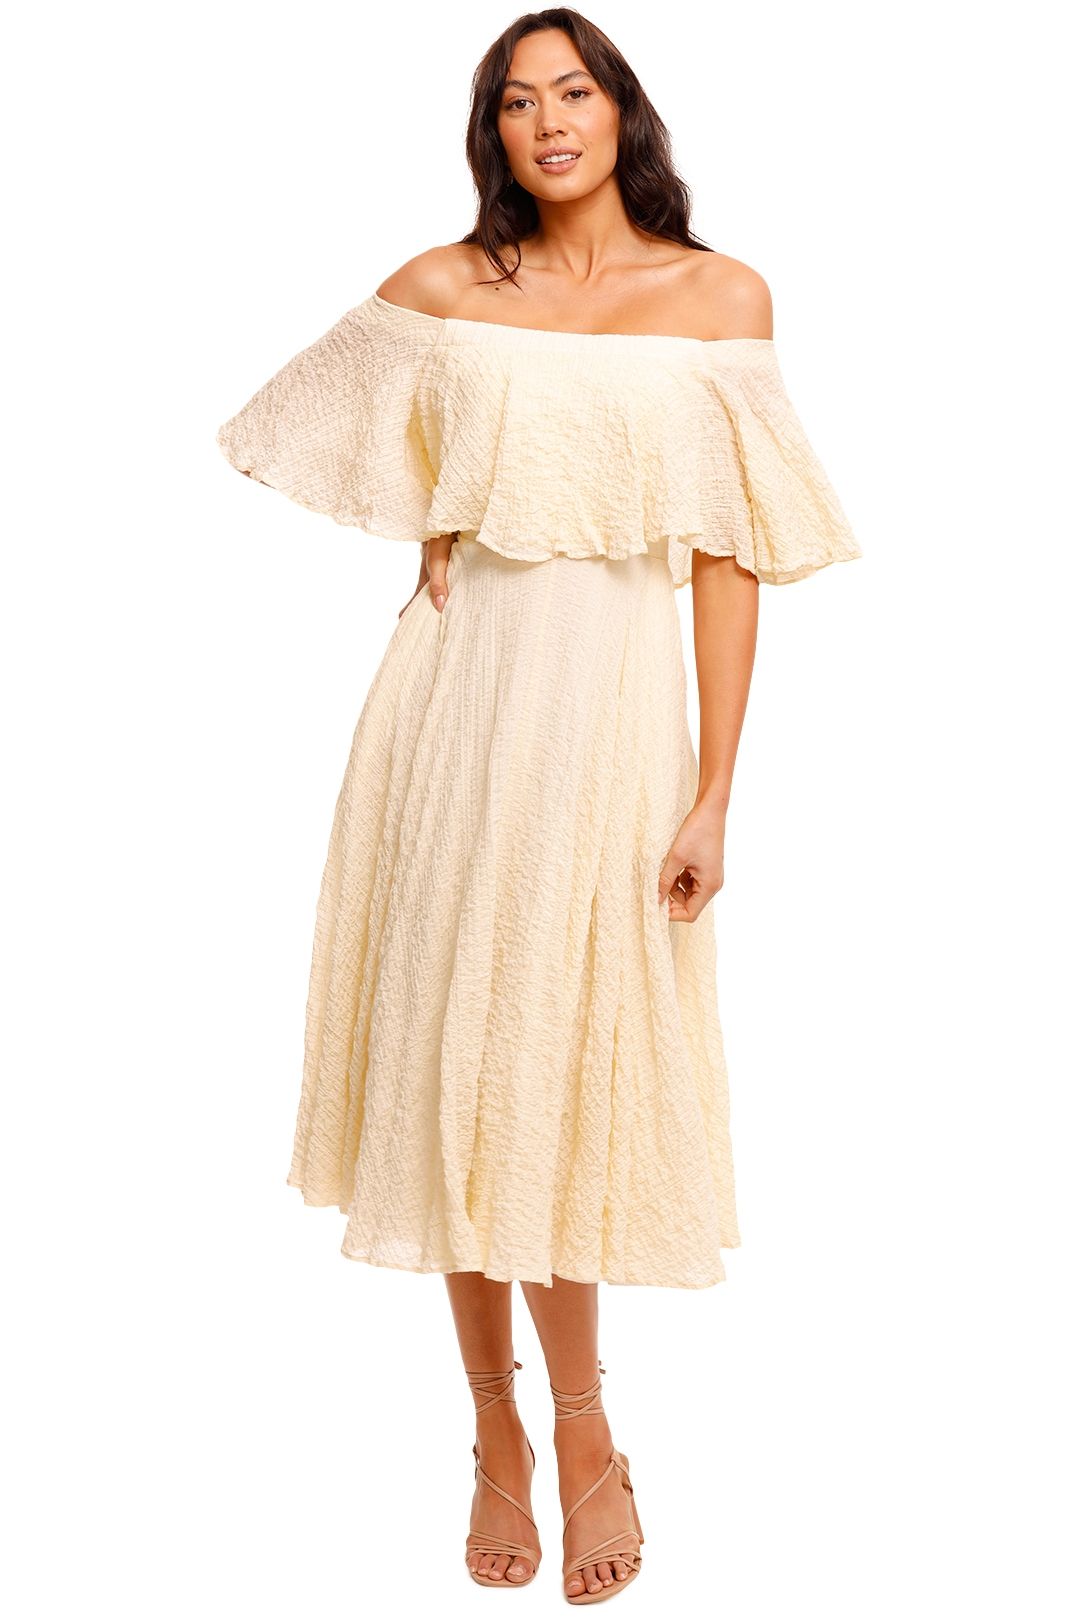 KITX Cotton White Tiered Dress full skirt